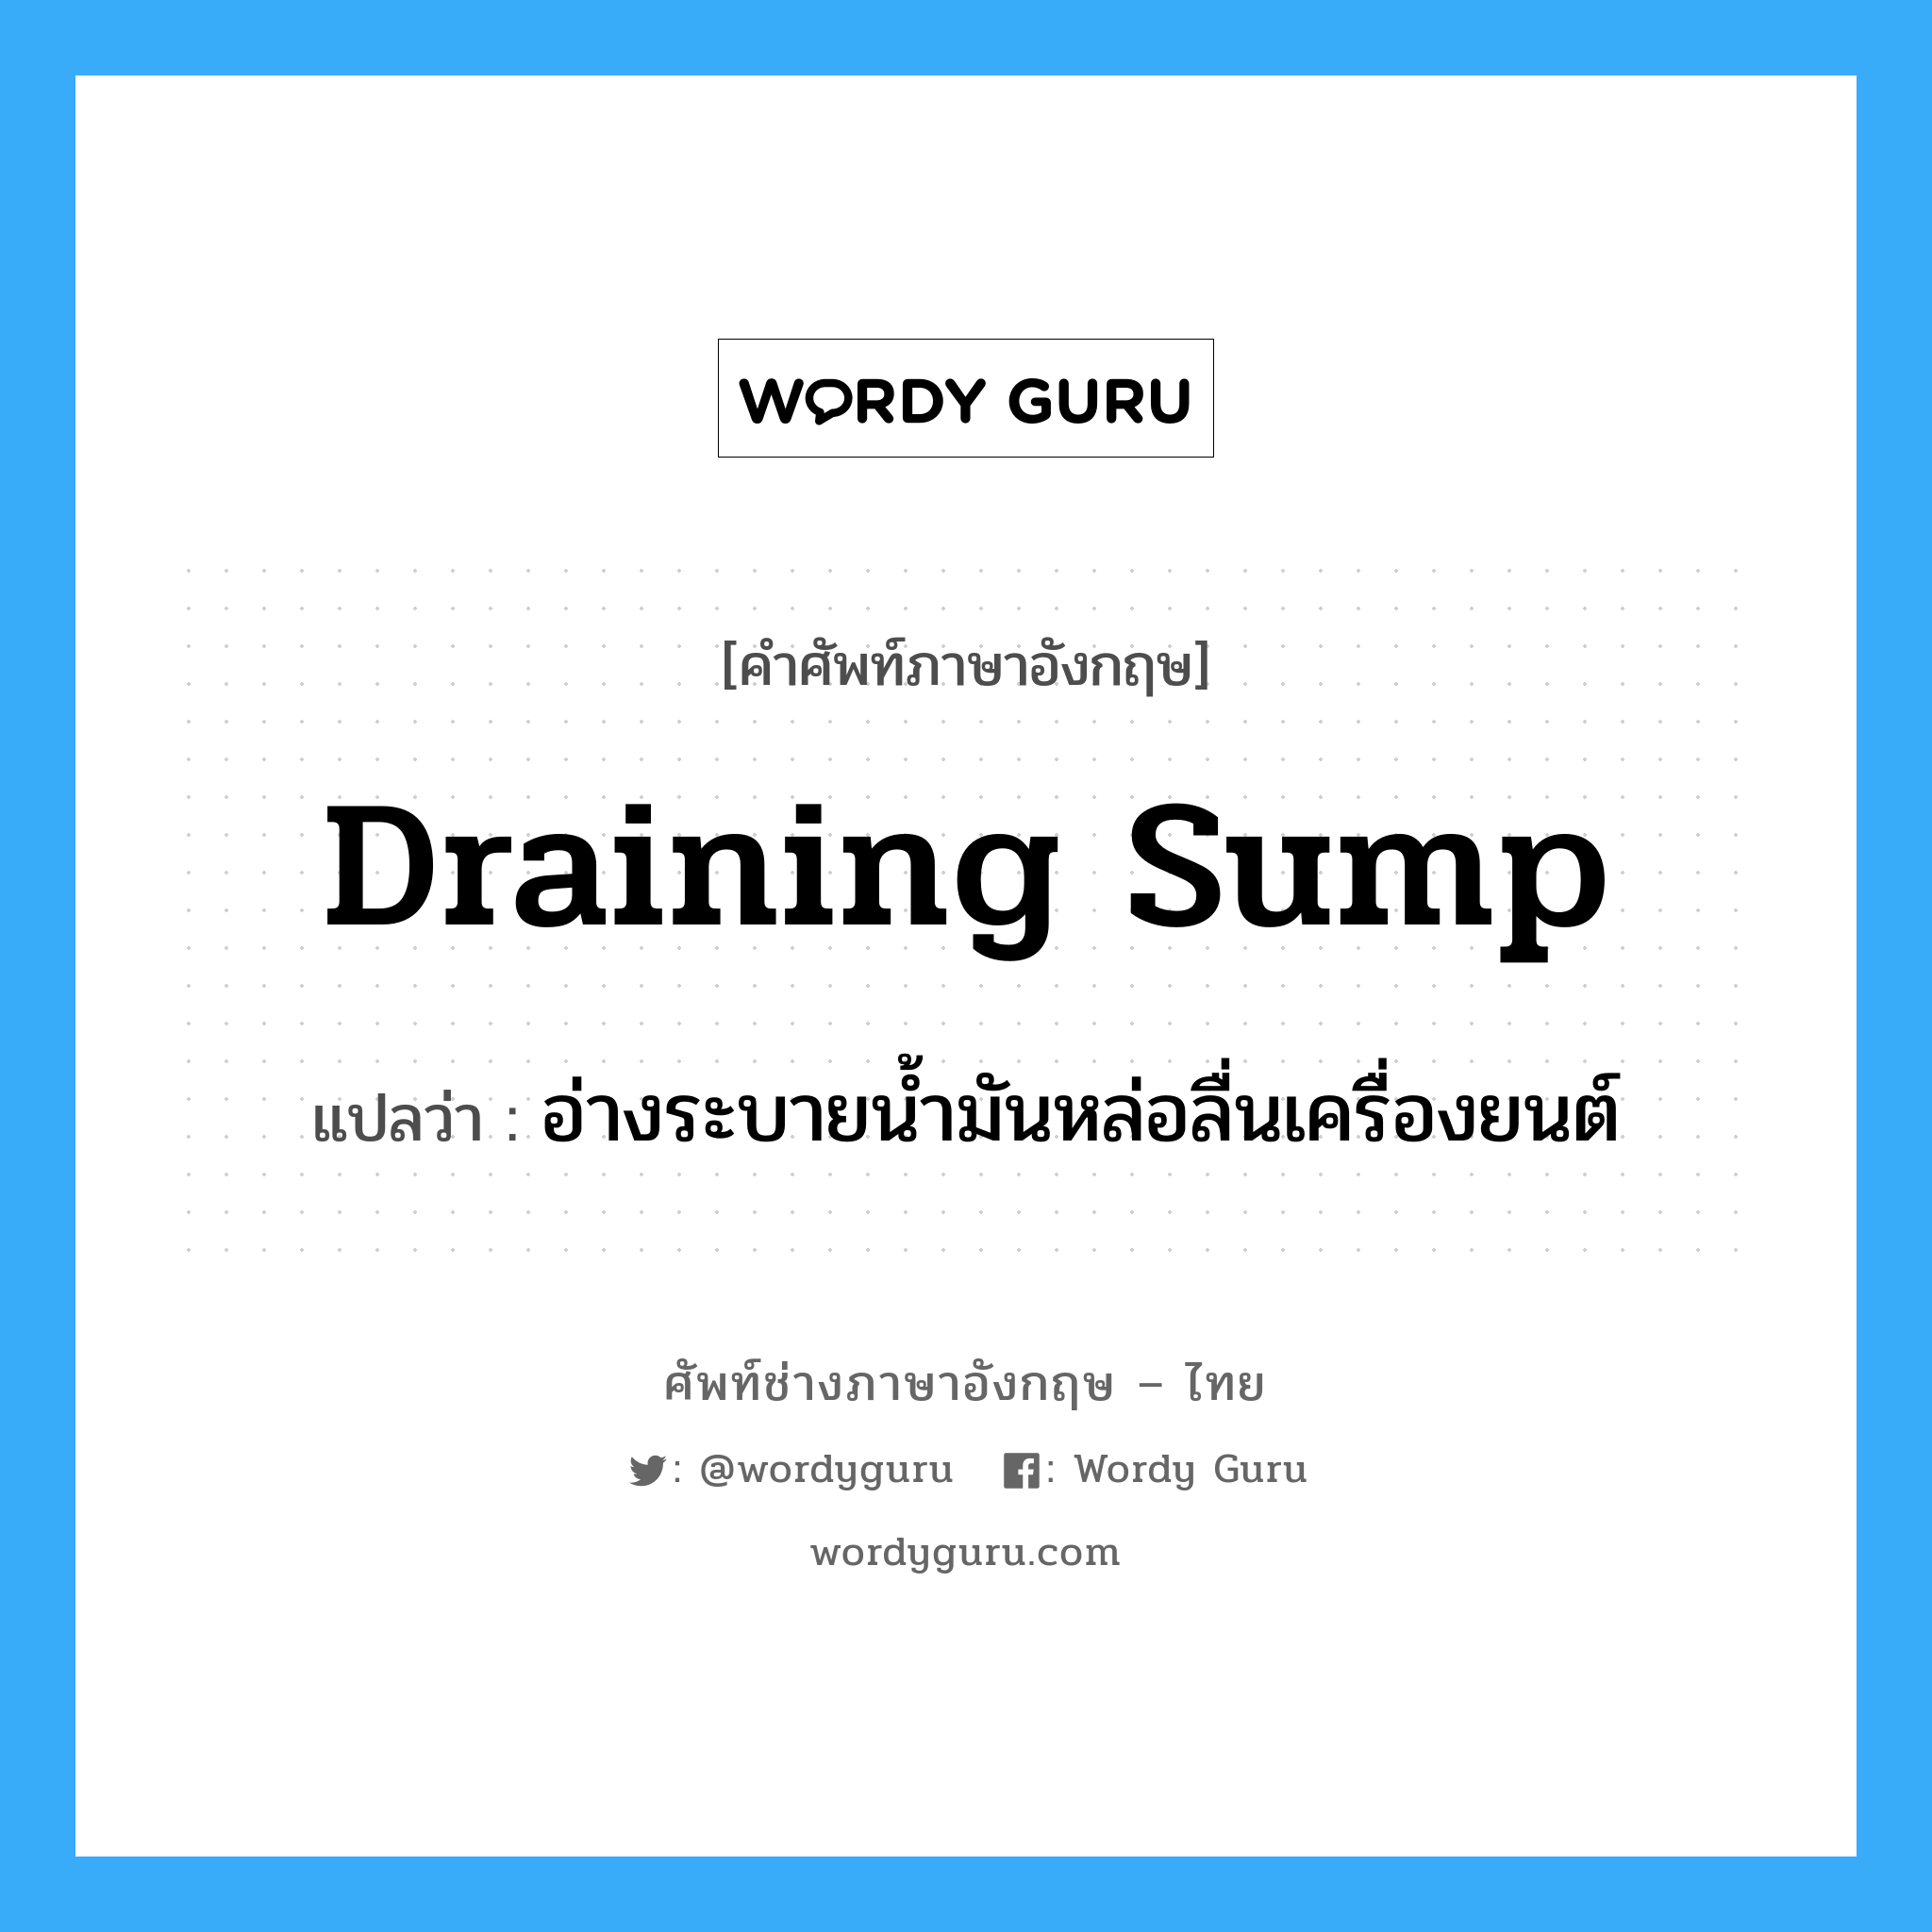 draining sump แปลว่า?, คำศัพท์ช่างภาษาอังกฤษ - ไทย draining sump คำศัพท์ภาษาอังกฤษ draining sump แปลว่า อ่างระบายน้ำมันหล่อลื่นเครื่องยนต์